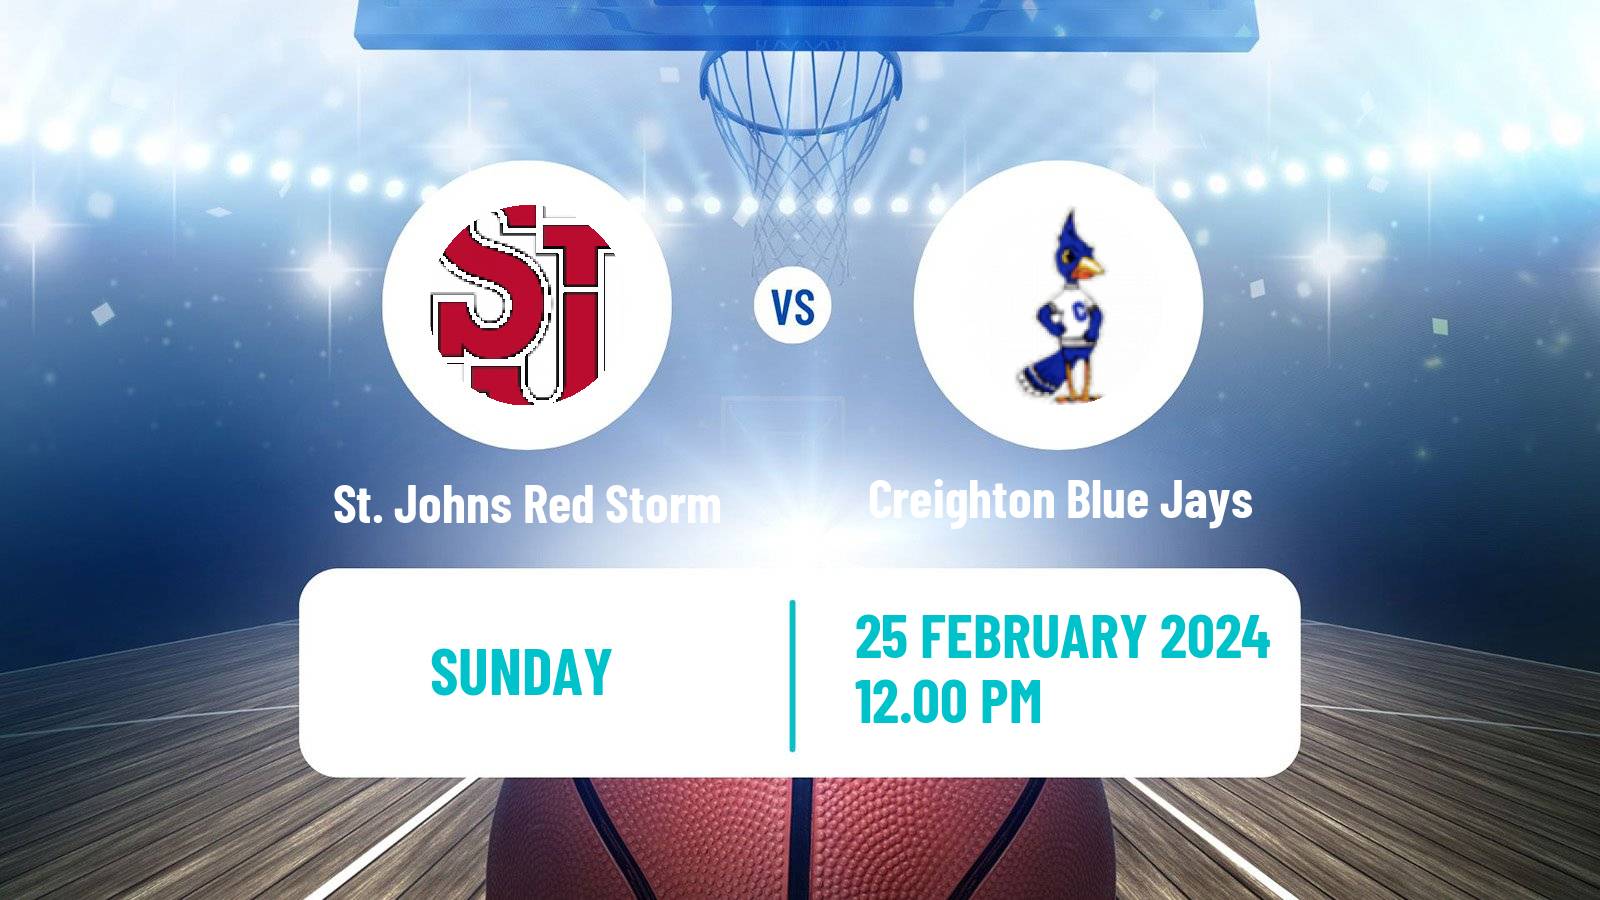 Basketball NCAA College Basketball St. Johns Red Storm - Creighton Blue Jays